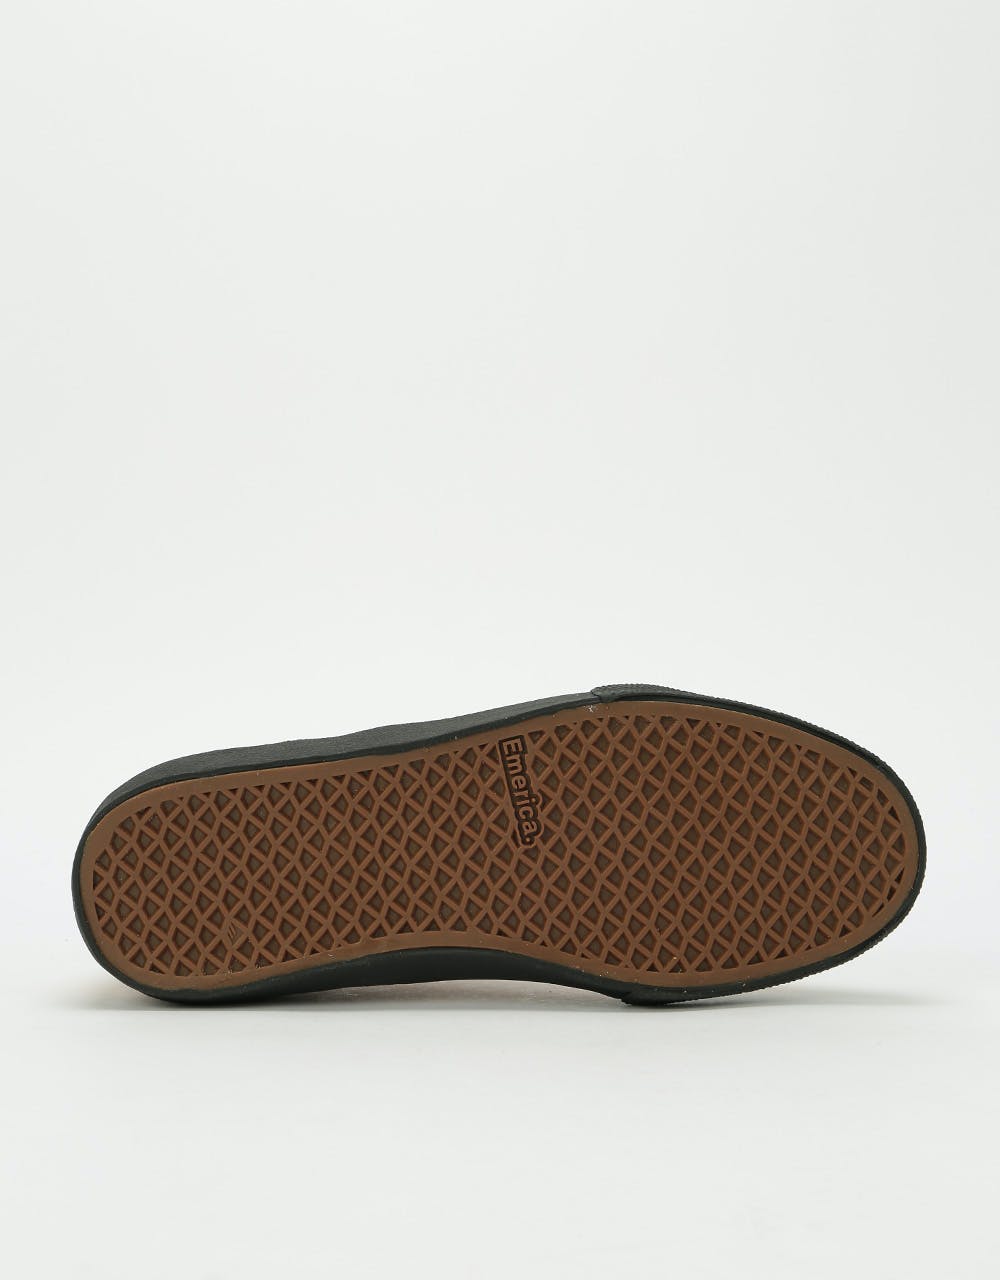 Emerica Provider Skate Shoes - Tan/Black